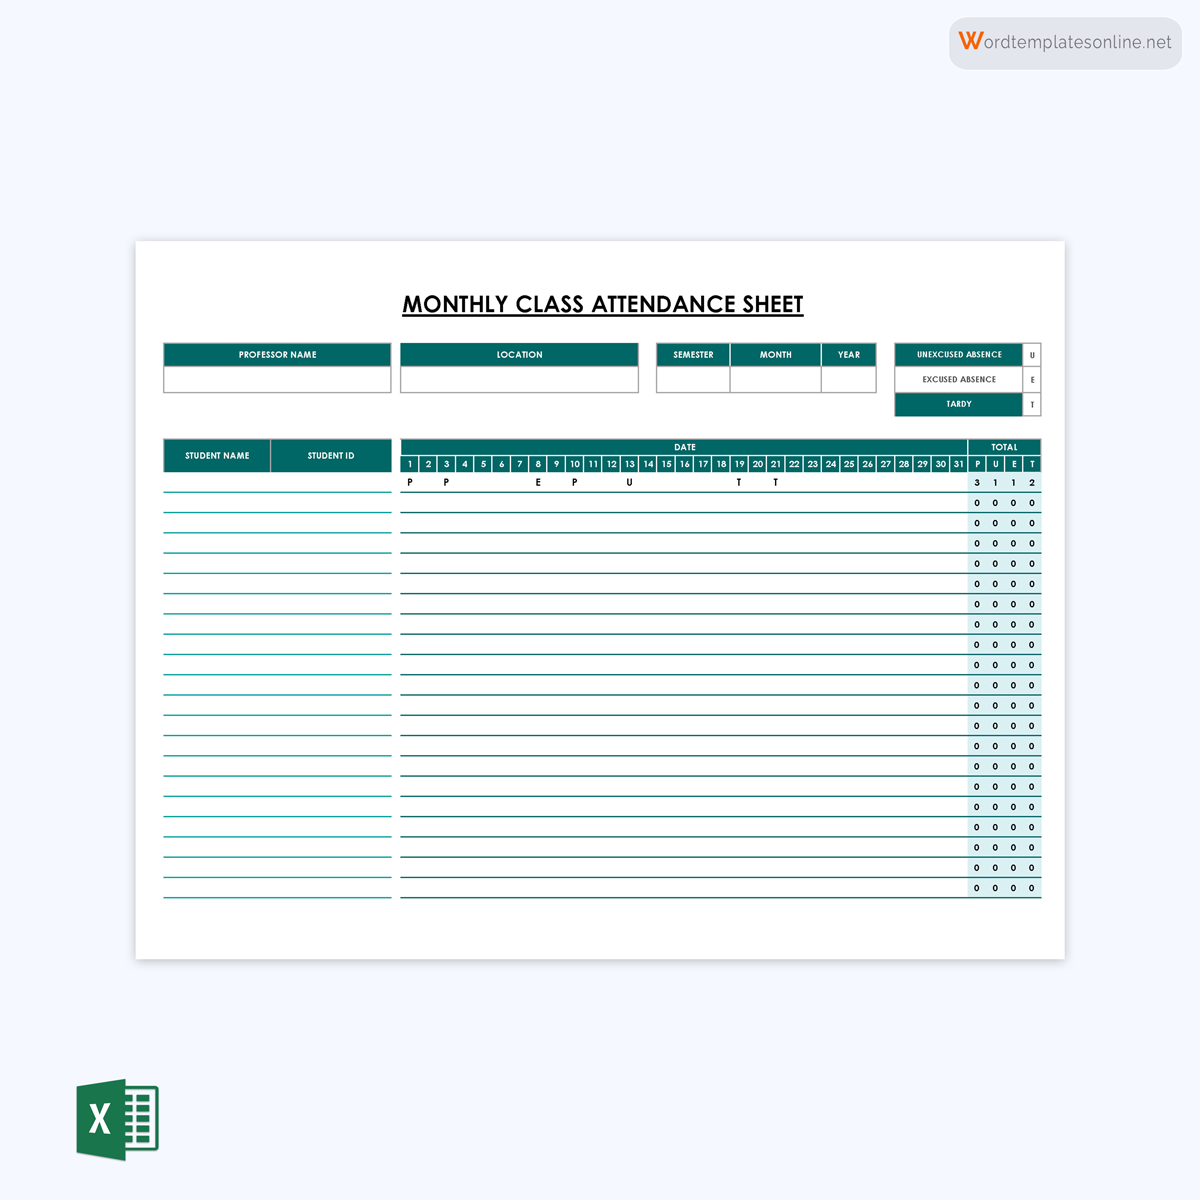 Attendance sheet template with editable fields